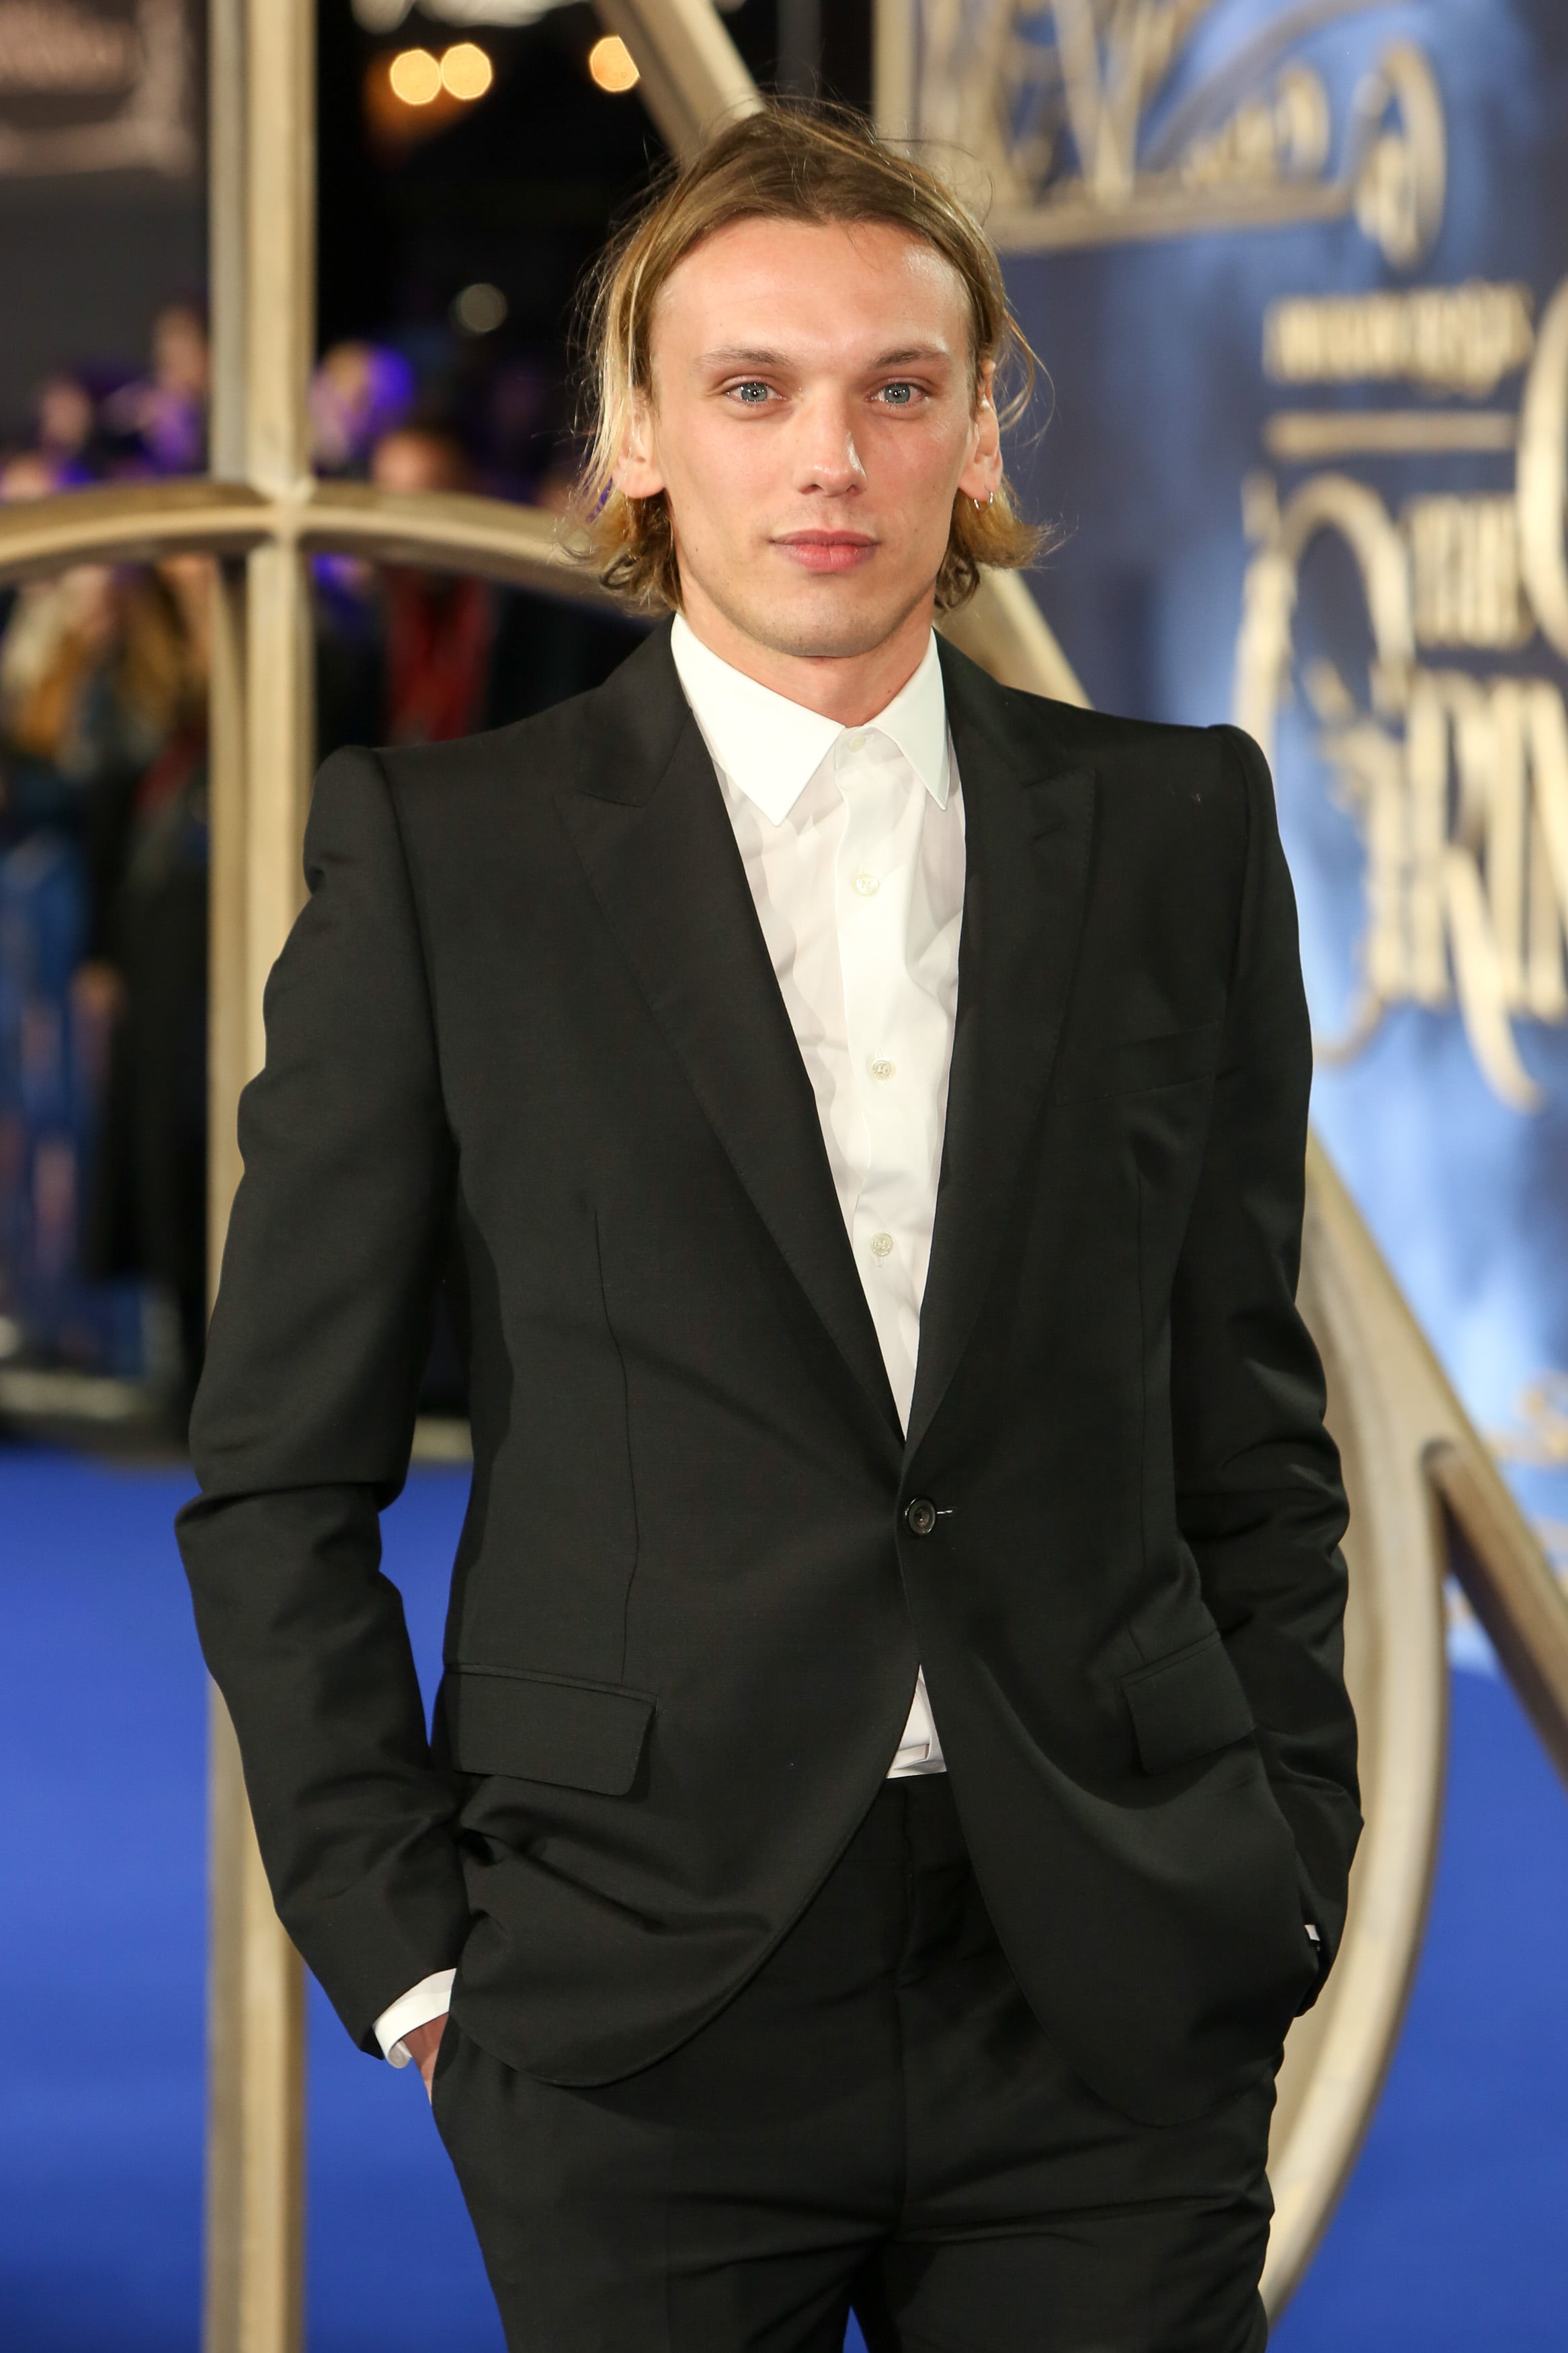 Tom Wlaschiha - German actor who has been cast as assassin Jaqen H